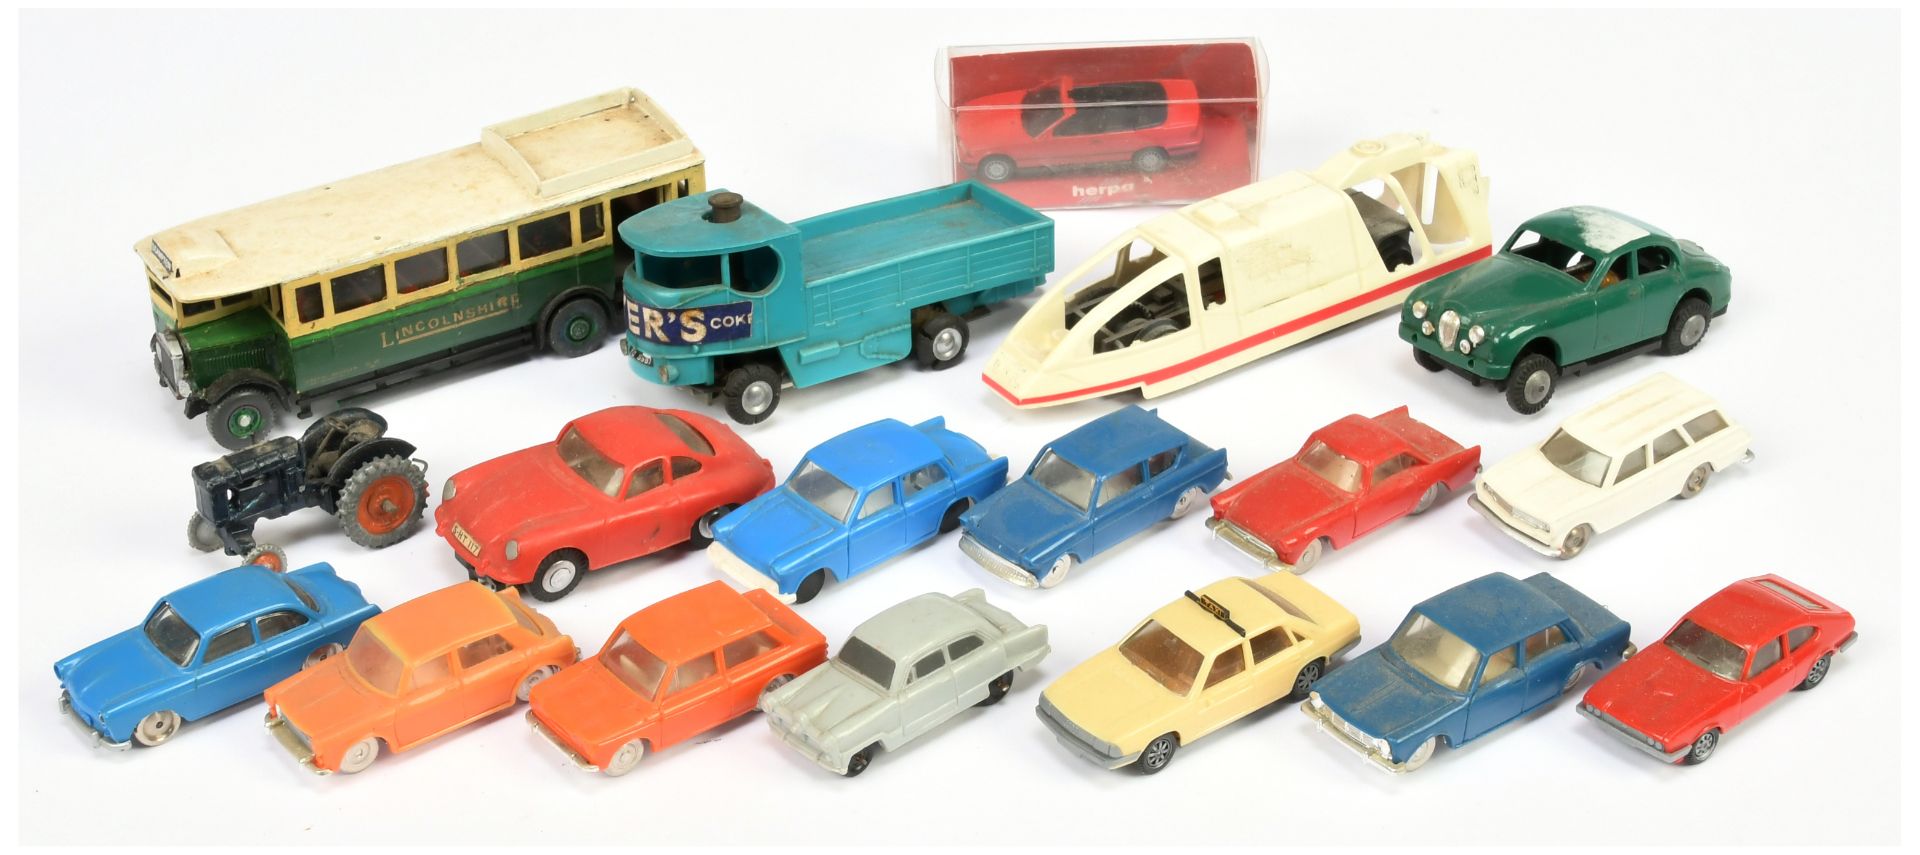 Britains, Lego, Minic Motorways & Similar mixed group of Vehicles 